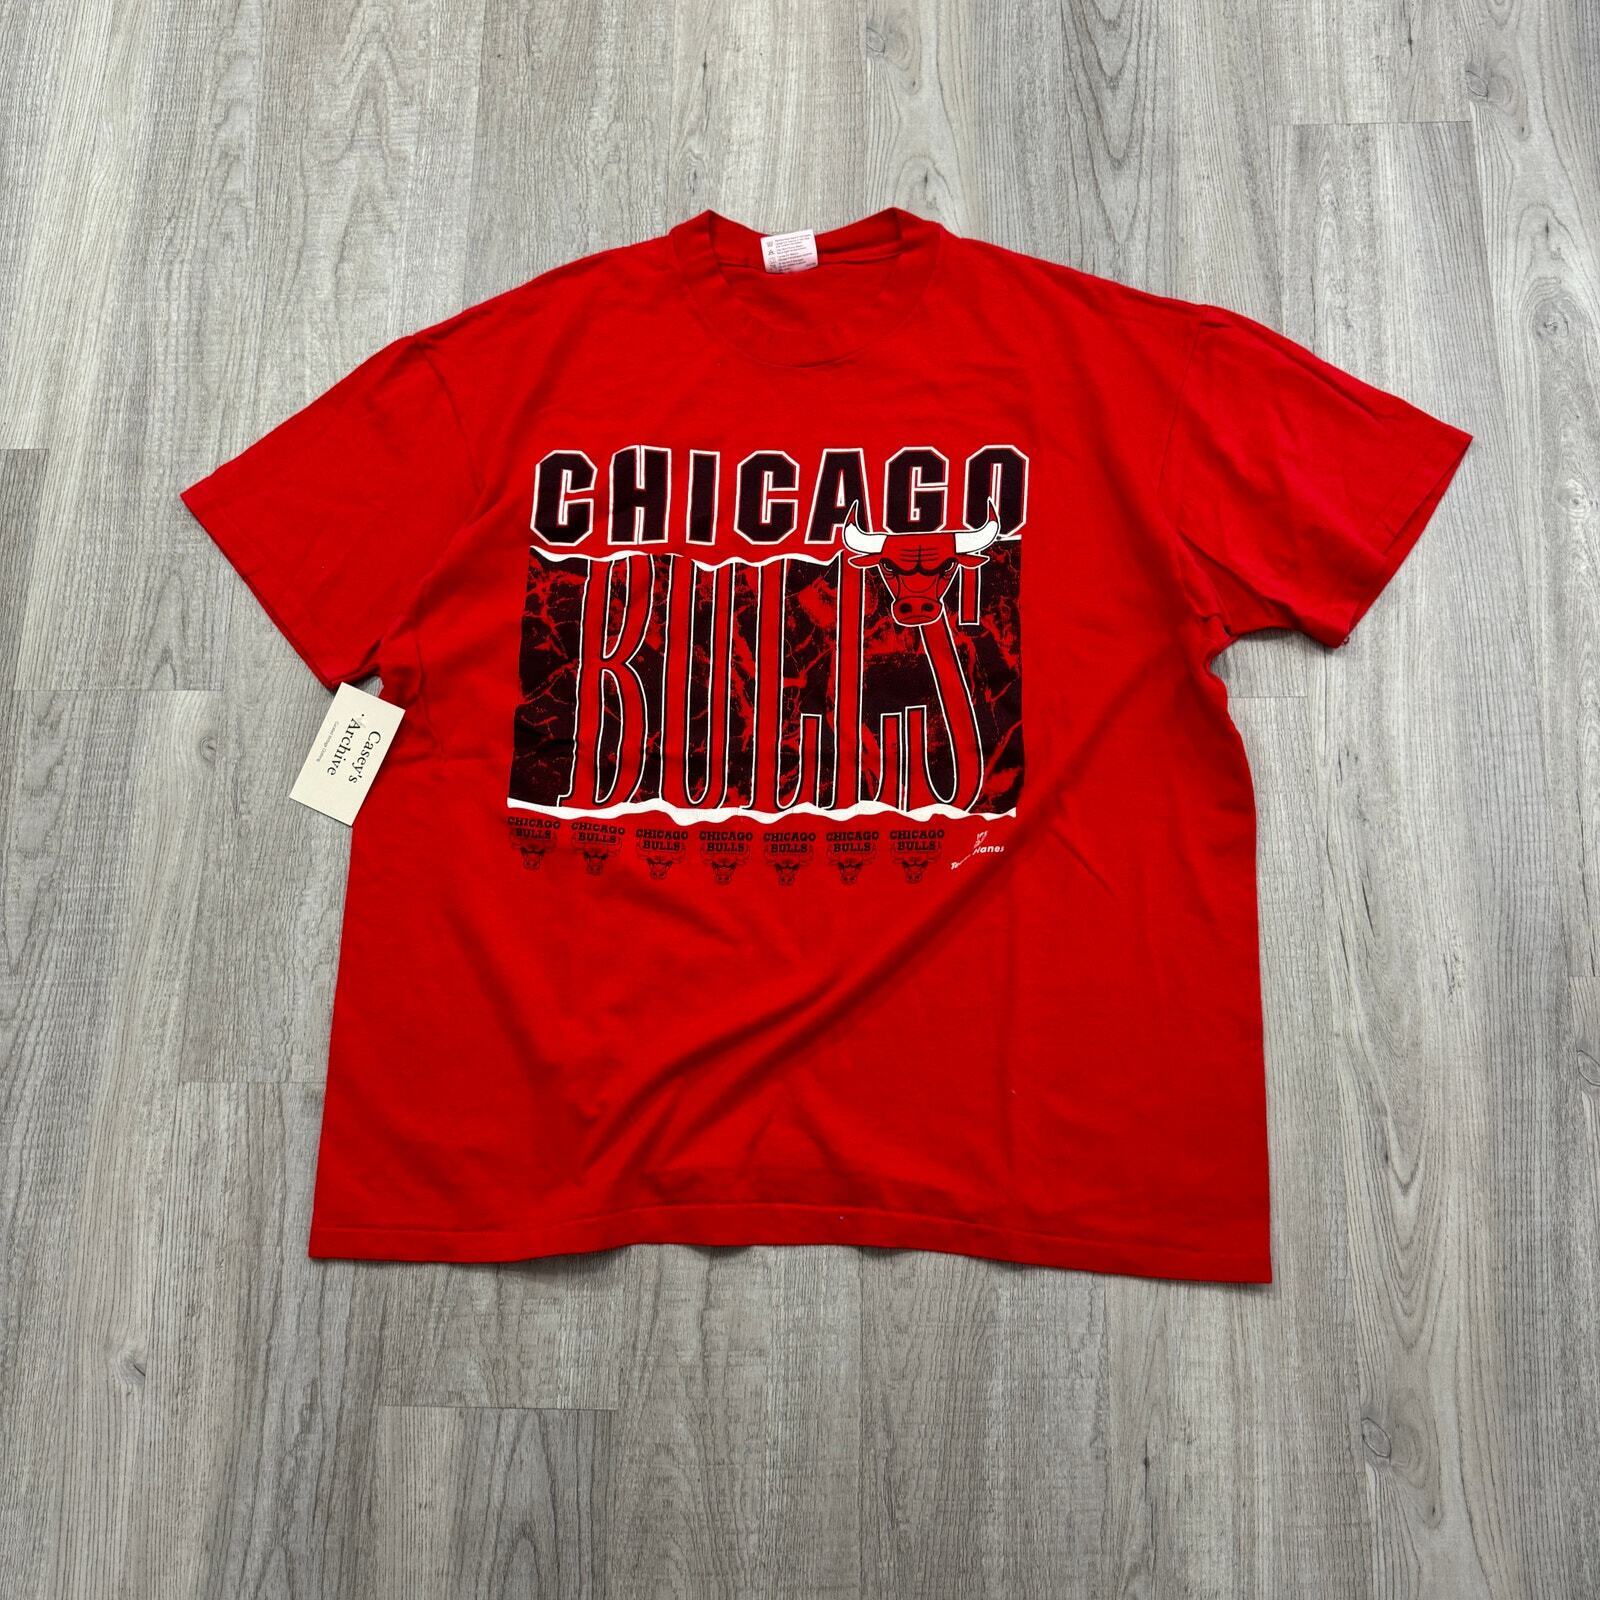 VINTAGE 90s Chicago Bulls NBA Basketball Graphic Shirt Size 2XL XXL 1990s Jordan